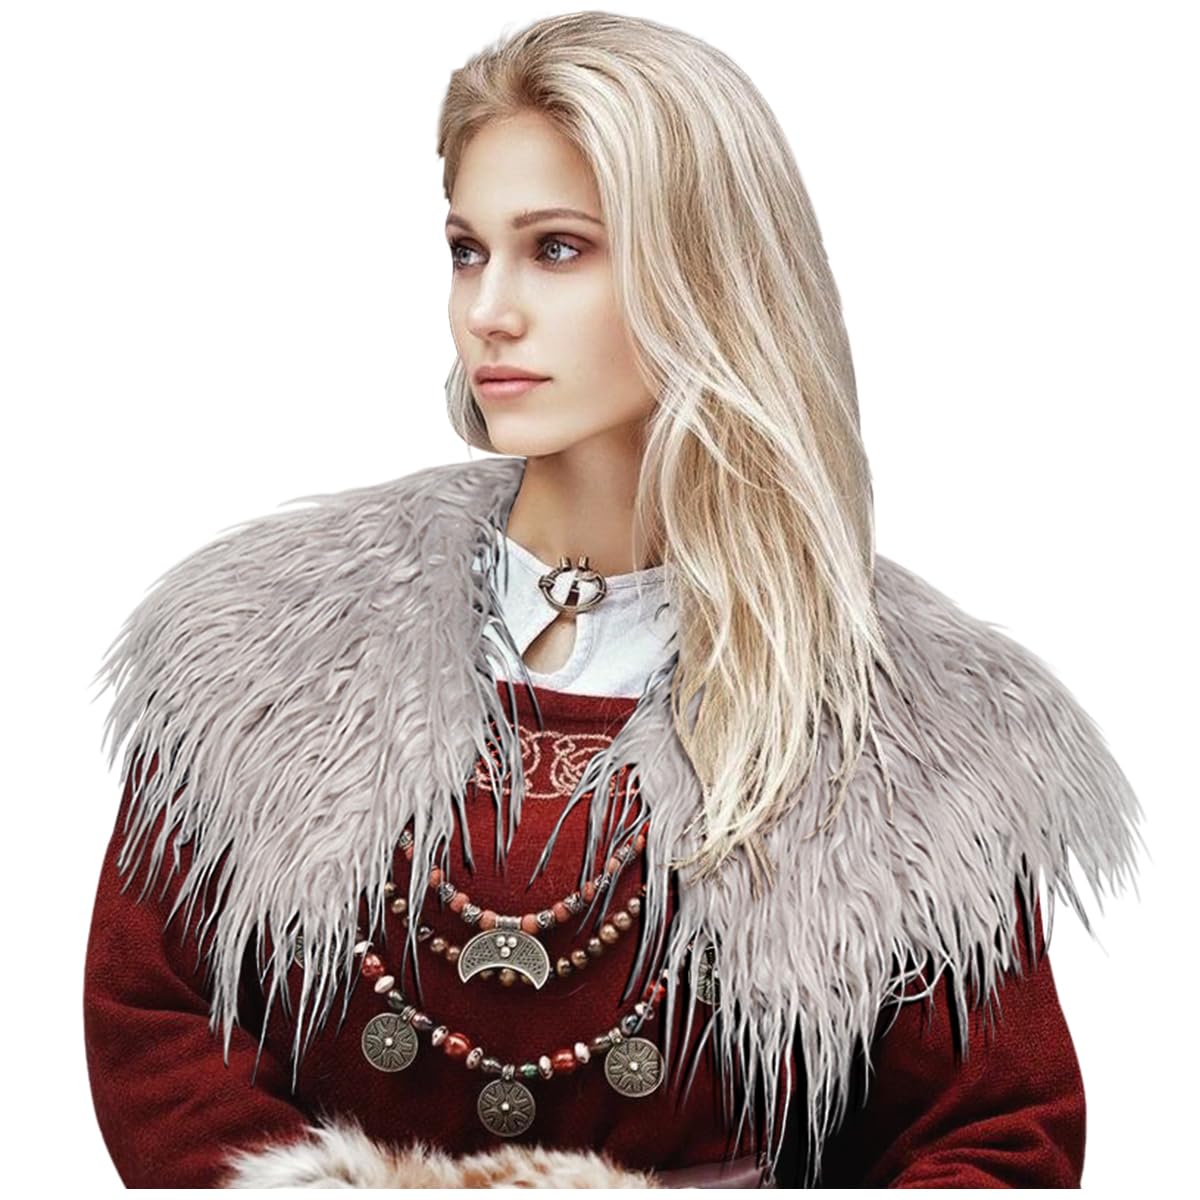 L'VOW Viking Queen Faux Woolen Fur Collar Shoulder Wrap Warrior Cape for Women LARP GoT Party Halloween Costume Grey